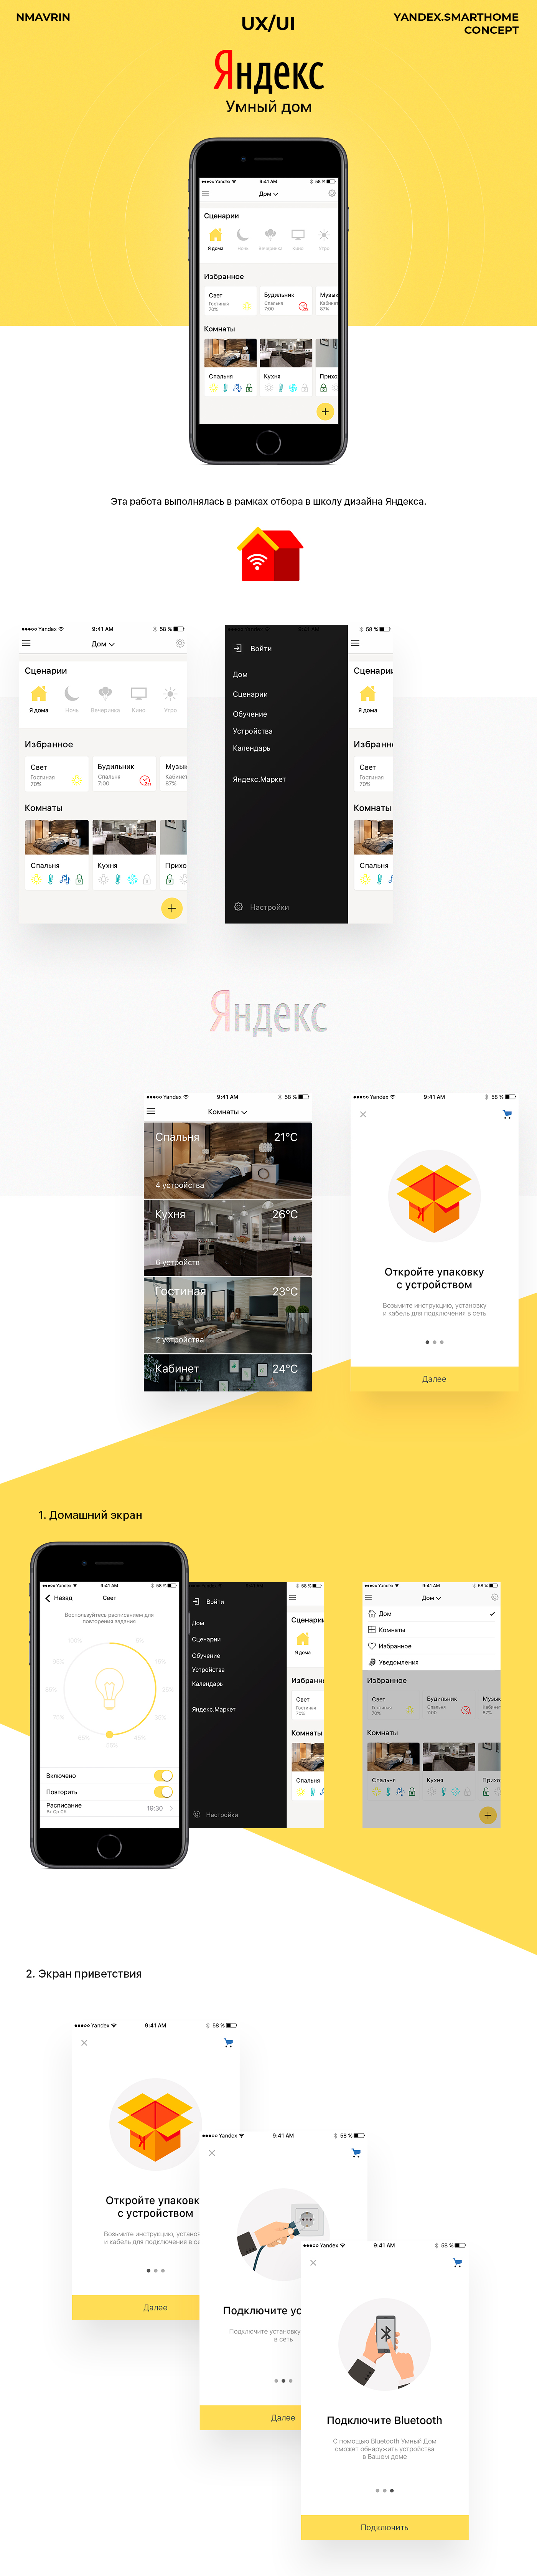 yandex mobile app smarthome ux UI Web Smart house